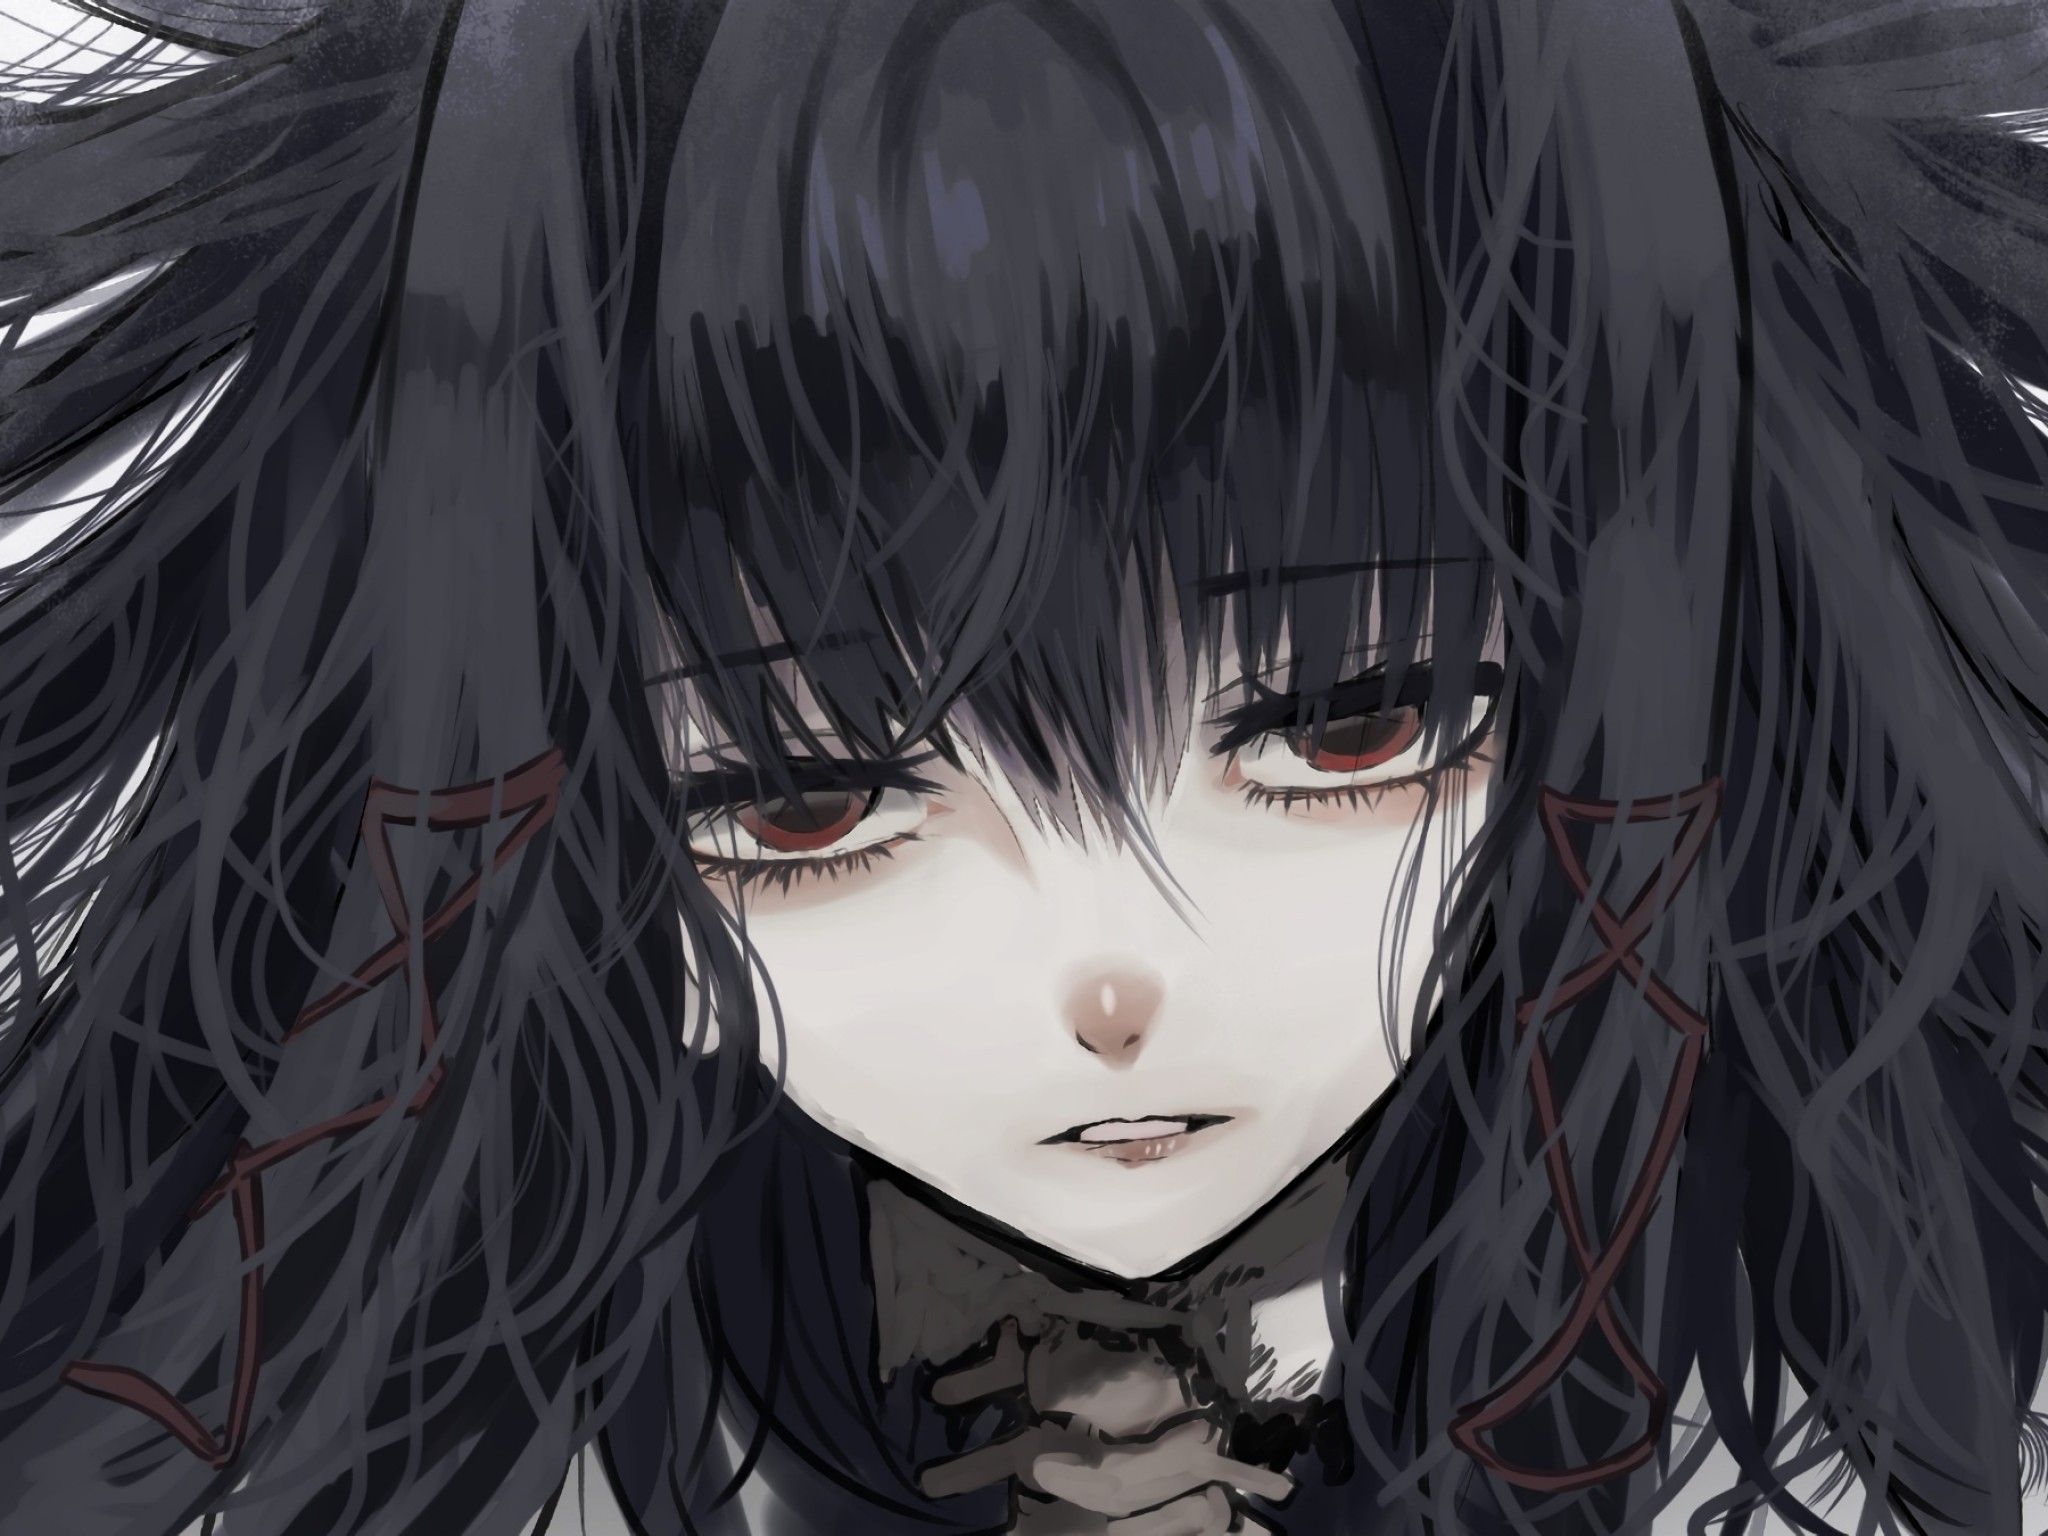 Download 2048x1536 Anime Girl, Gothic, Close Up, Depressed, Black Hair Wallpaper For Ainol Novo 9 Spark